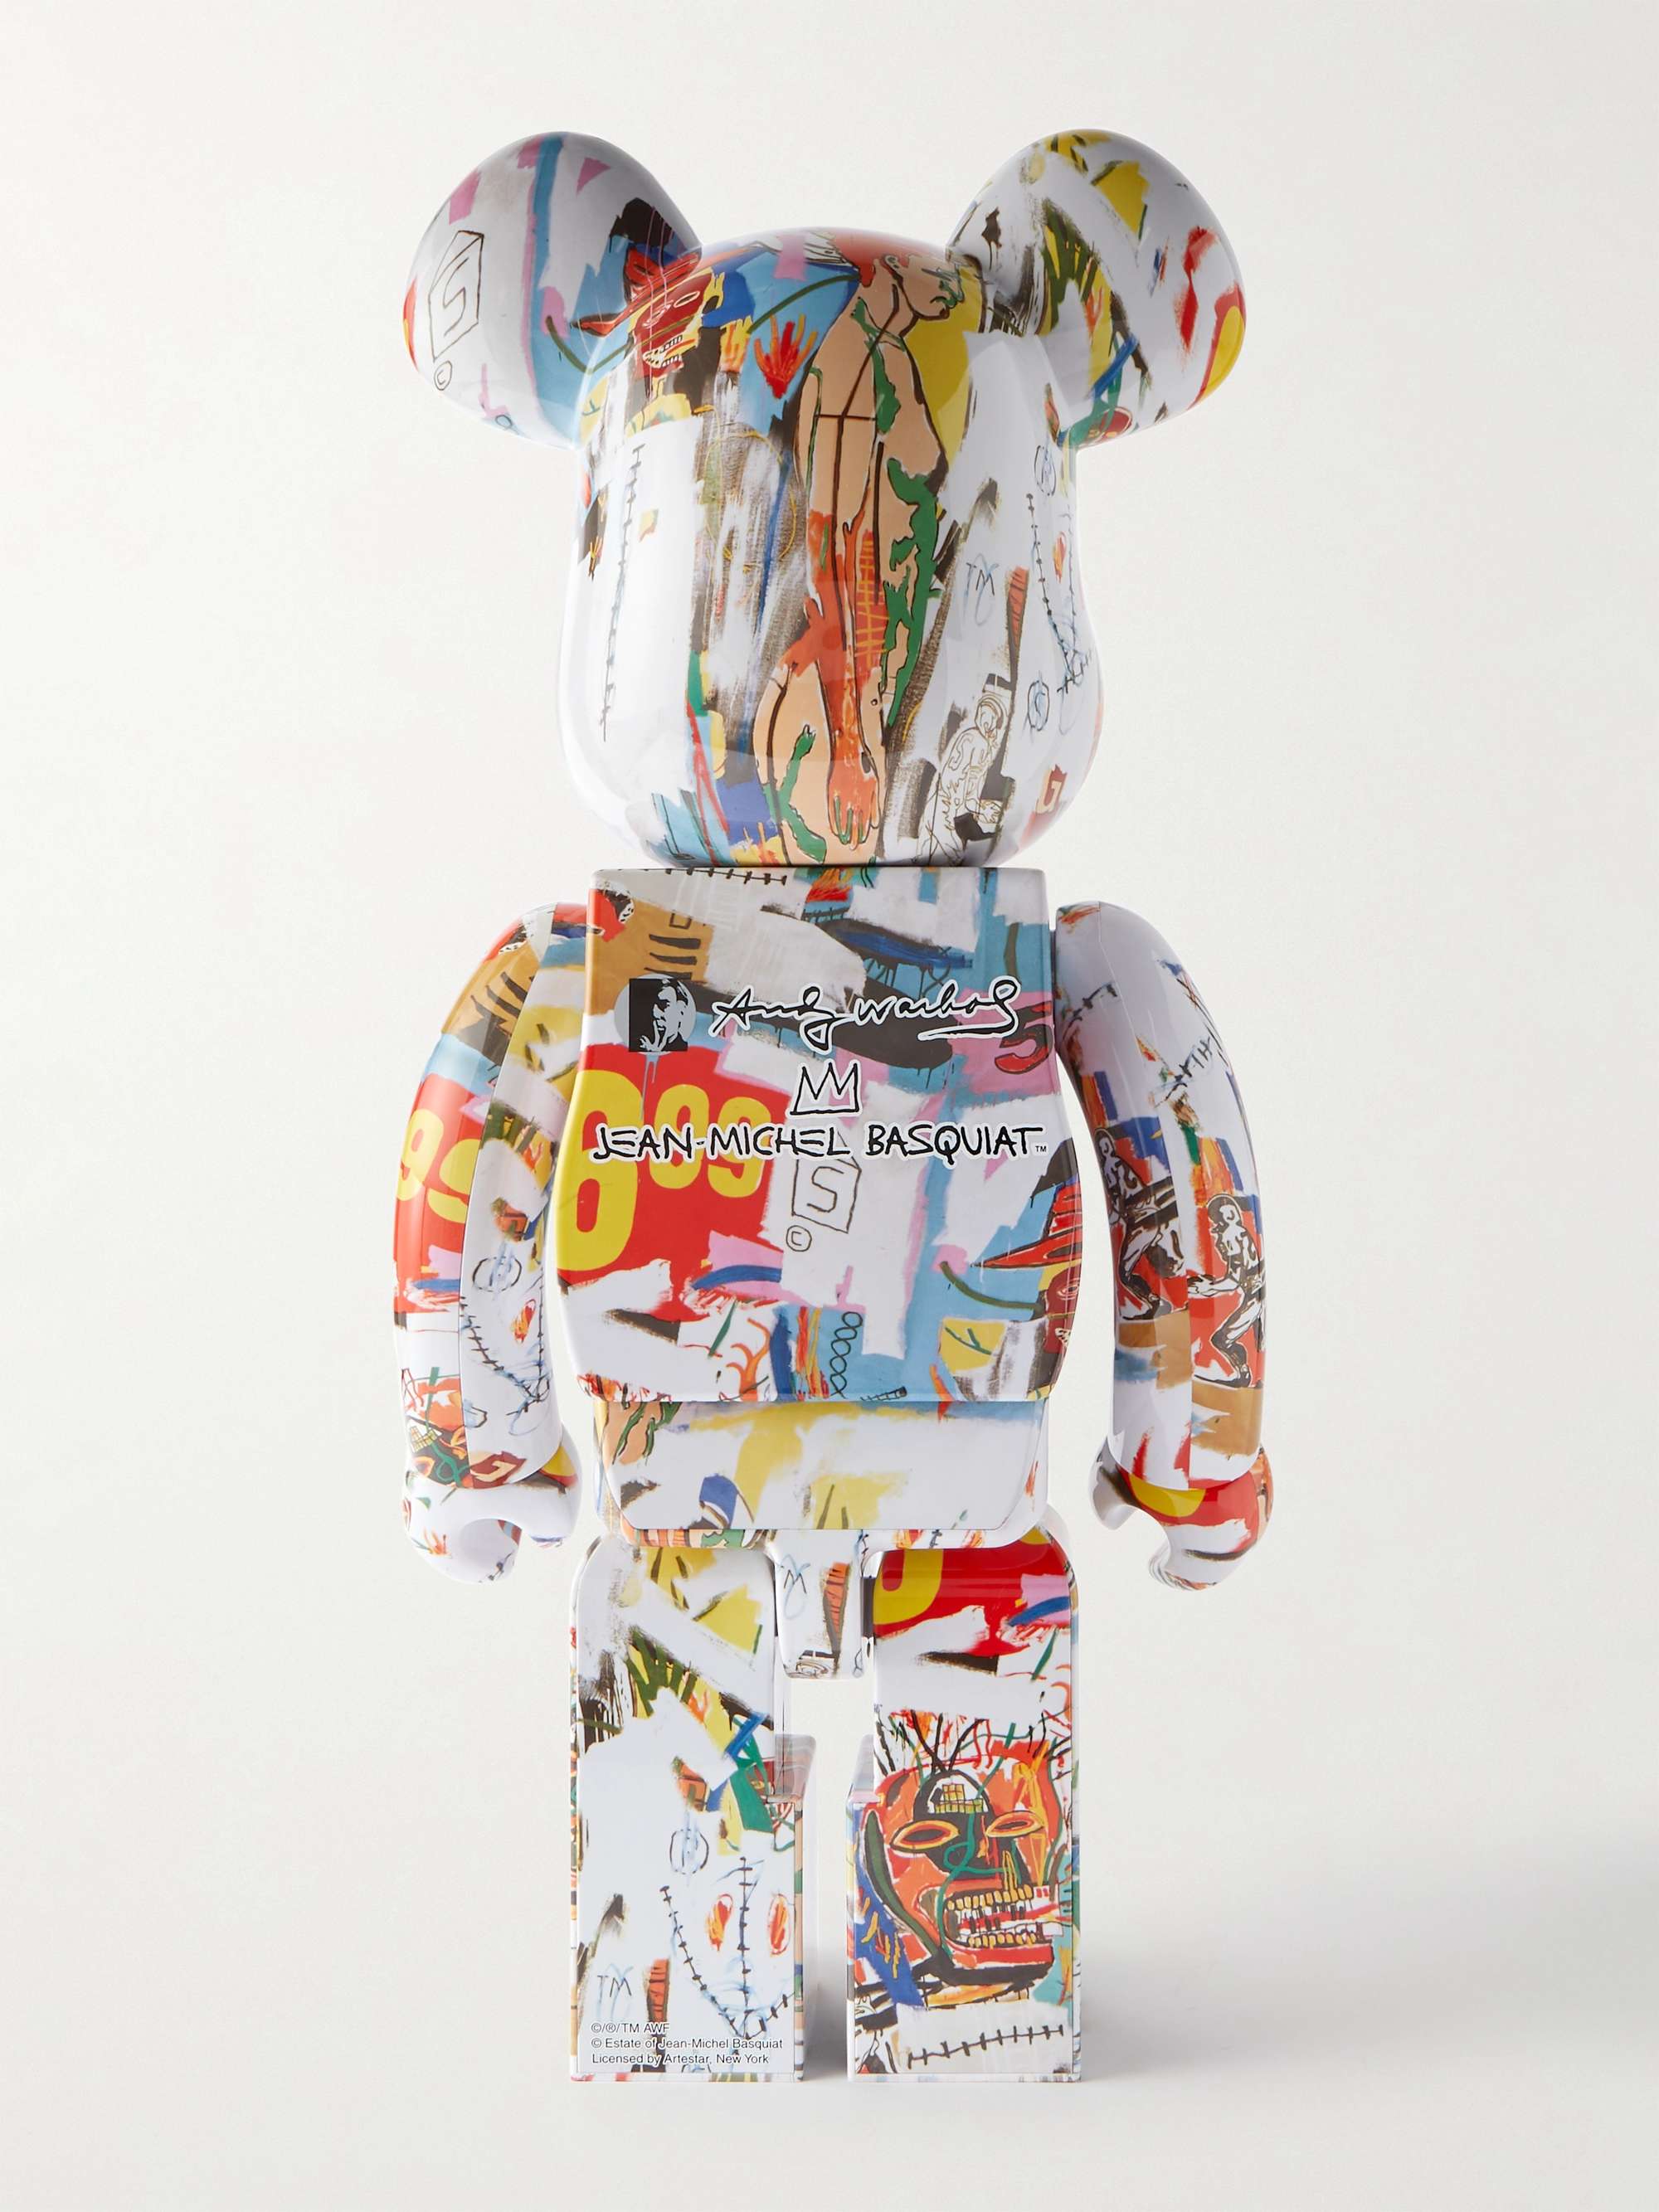 BE@RBRICK + Andy Warhol + Jean-Michel Basquiat 400% Printed PVC Figurine